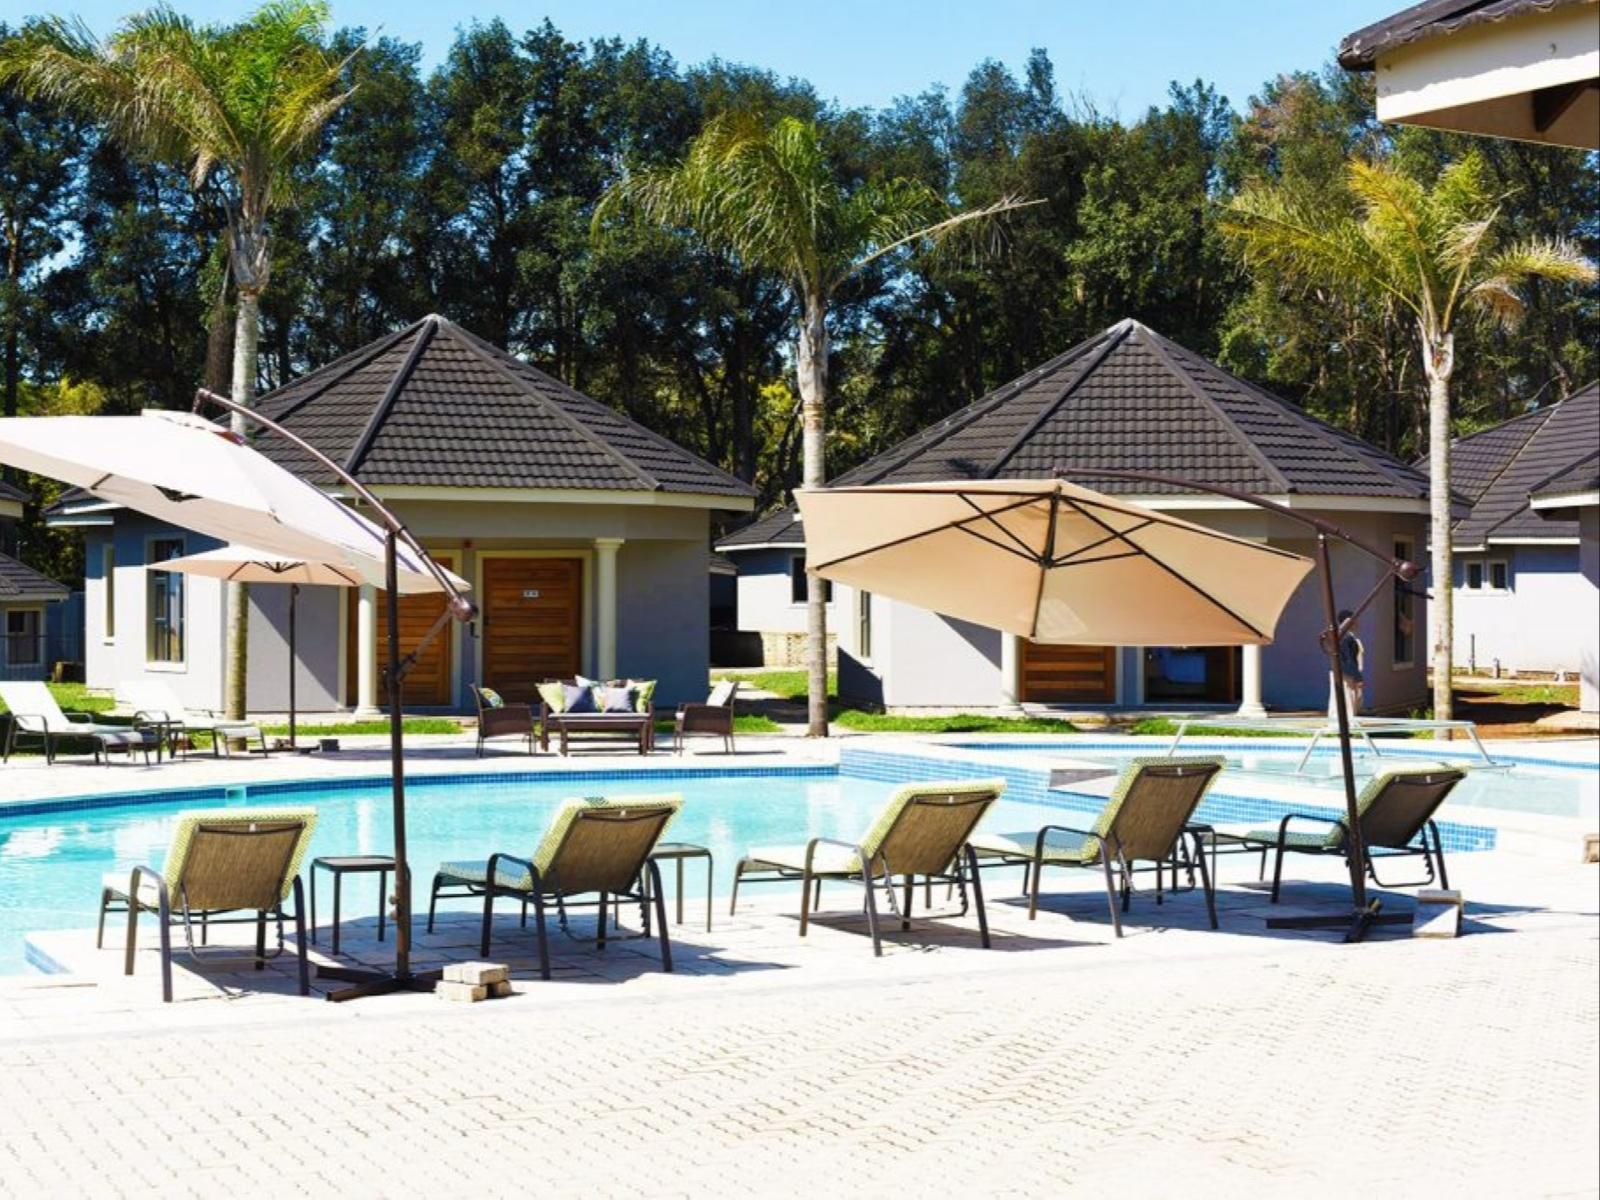 Aloe Lifestyle Hotel Eshowe Kwazulu Natal South Africa Palm Tree, Plant, Nature, Wood, Swimming Pool